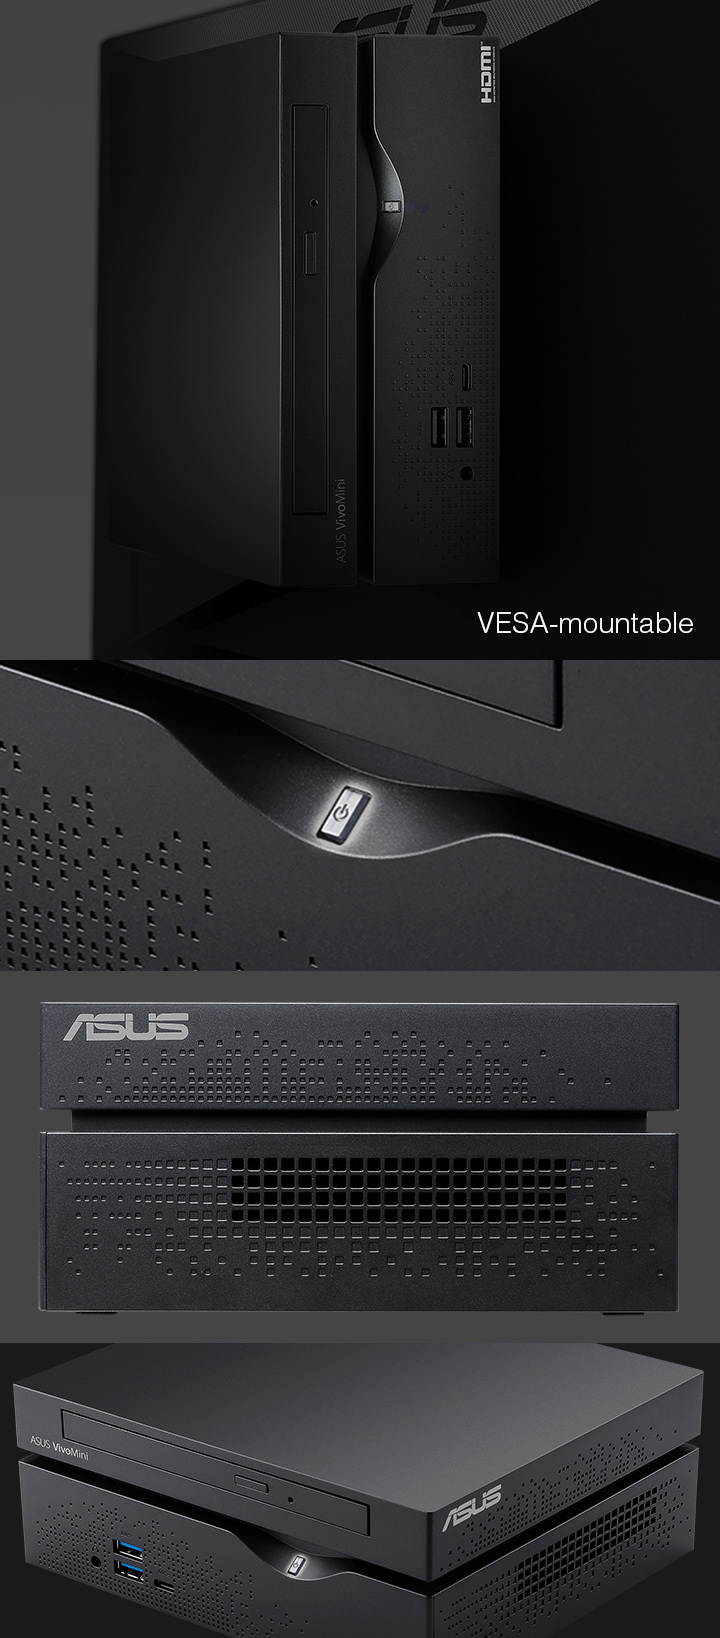 VESA-mountable, Ergonomically-designed power button, Cooling vents, Modern, stylish design